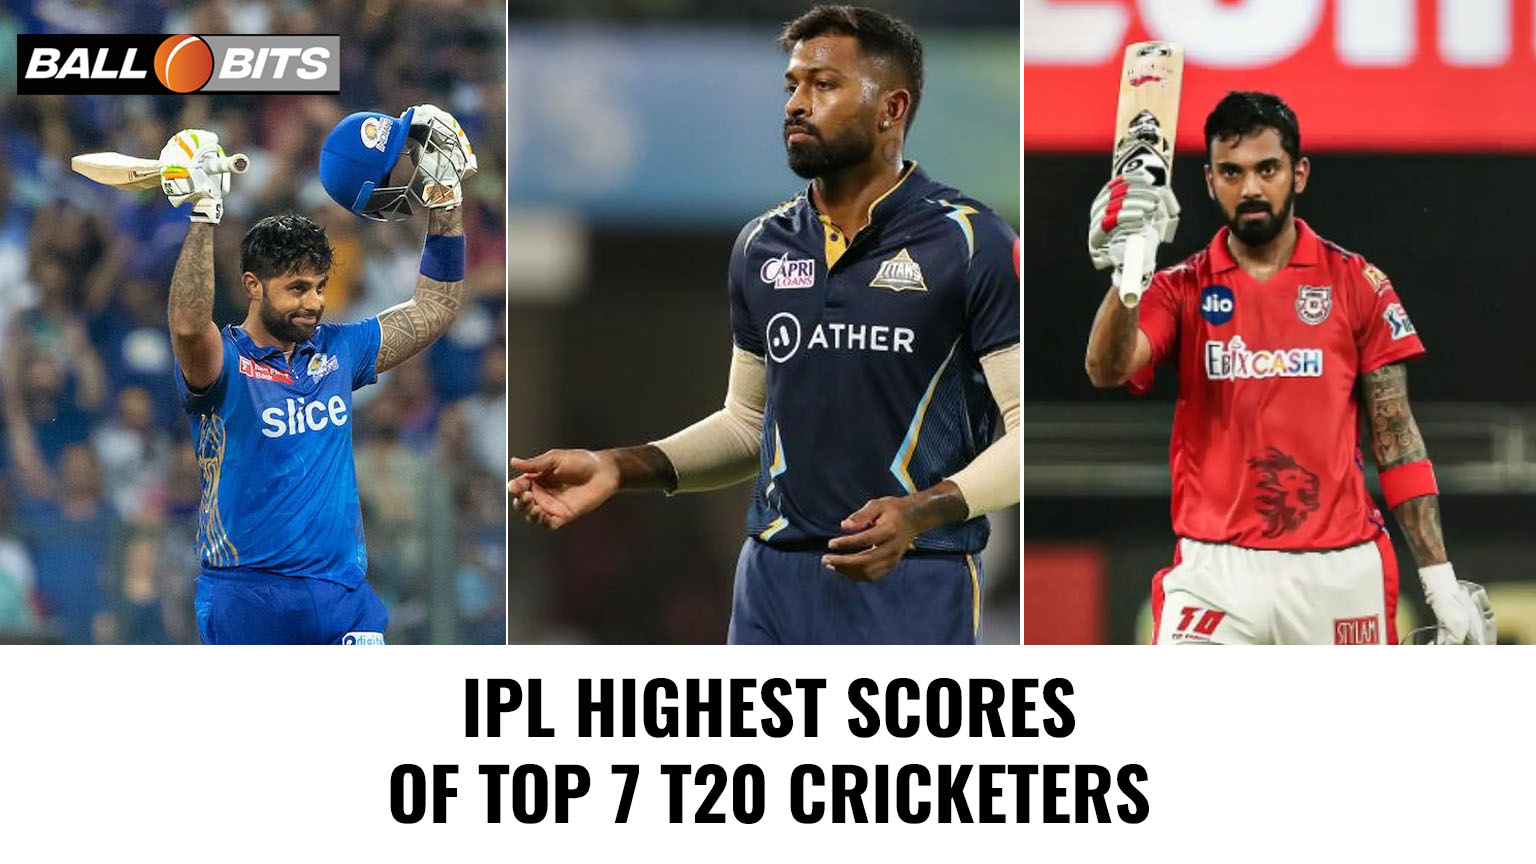 IPL Highest Scores of kl rahul, suryakumar yadav, shubman gill, rinku singh, yashasvi jaiswal, suresh raina